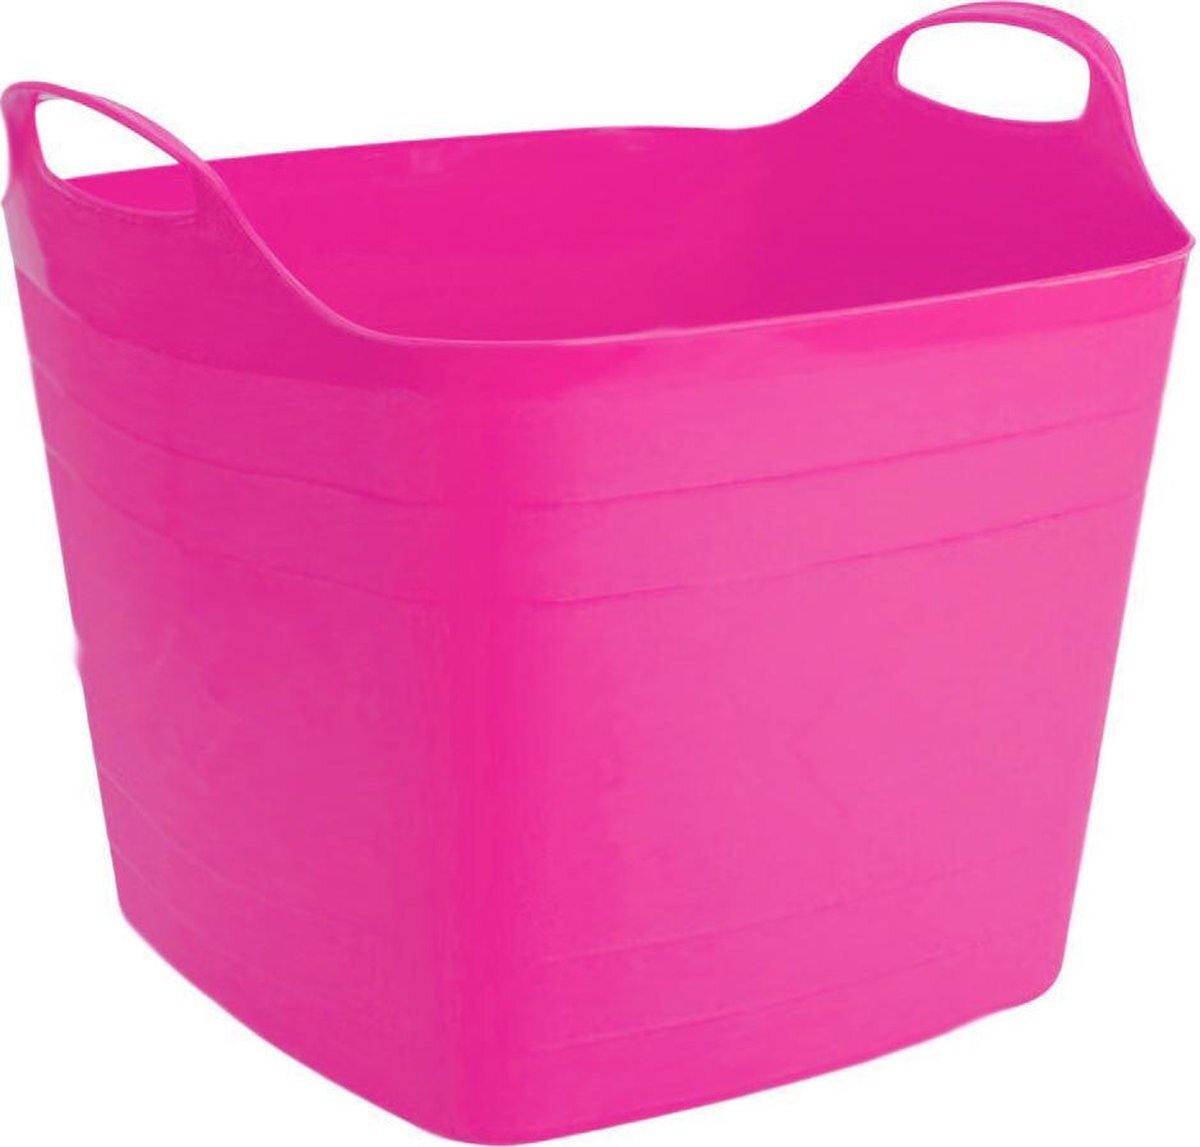 Forte Plastics Flexibele kuip emmer/wasmand vierkant fuchsia roze 40 liter - 42 x 42 cm